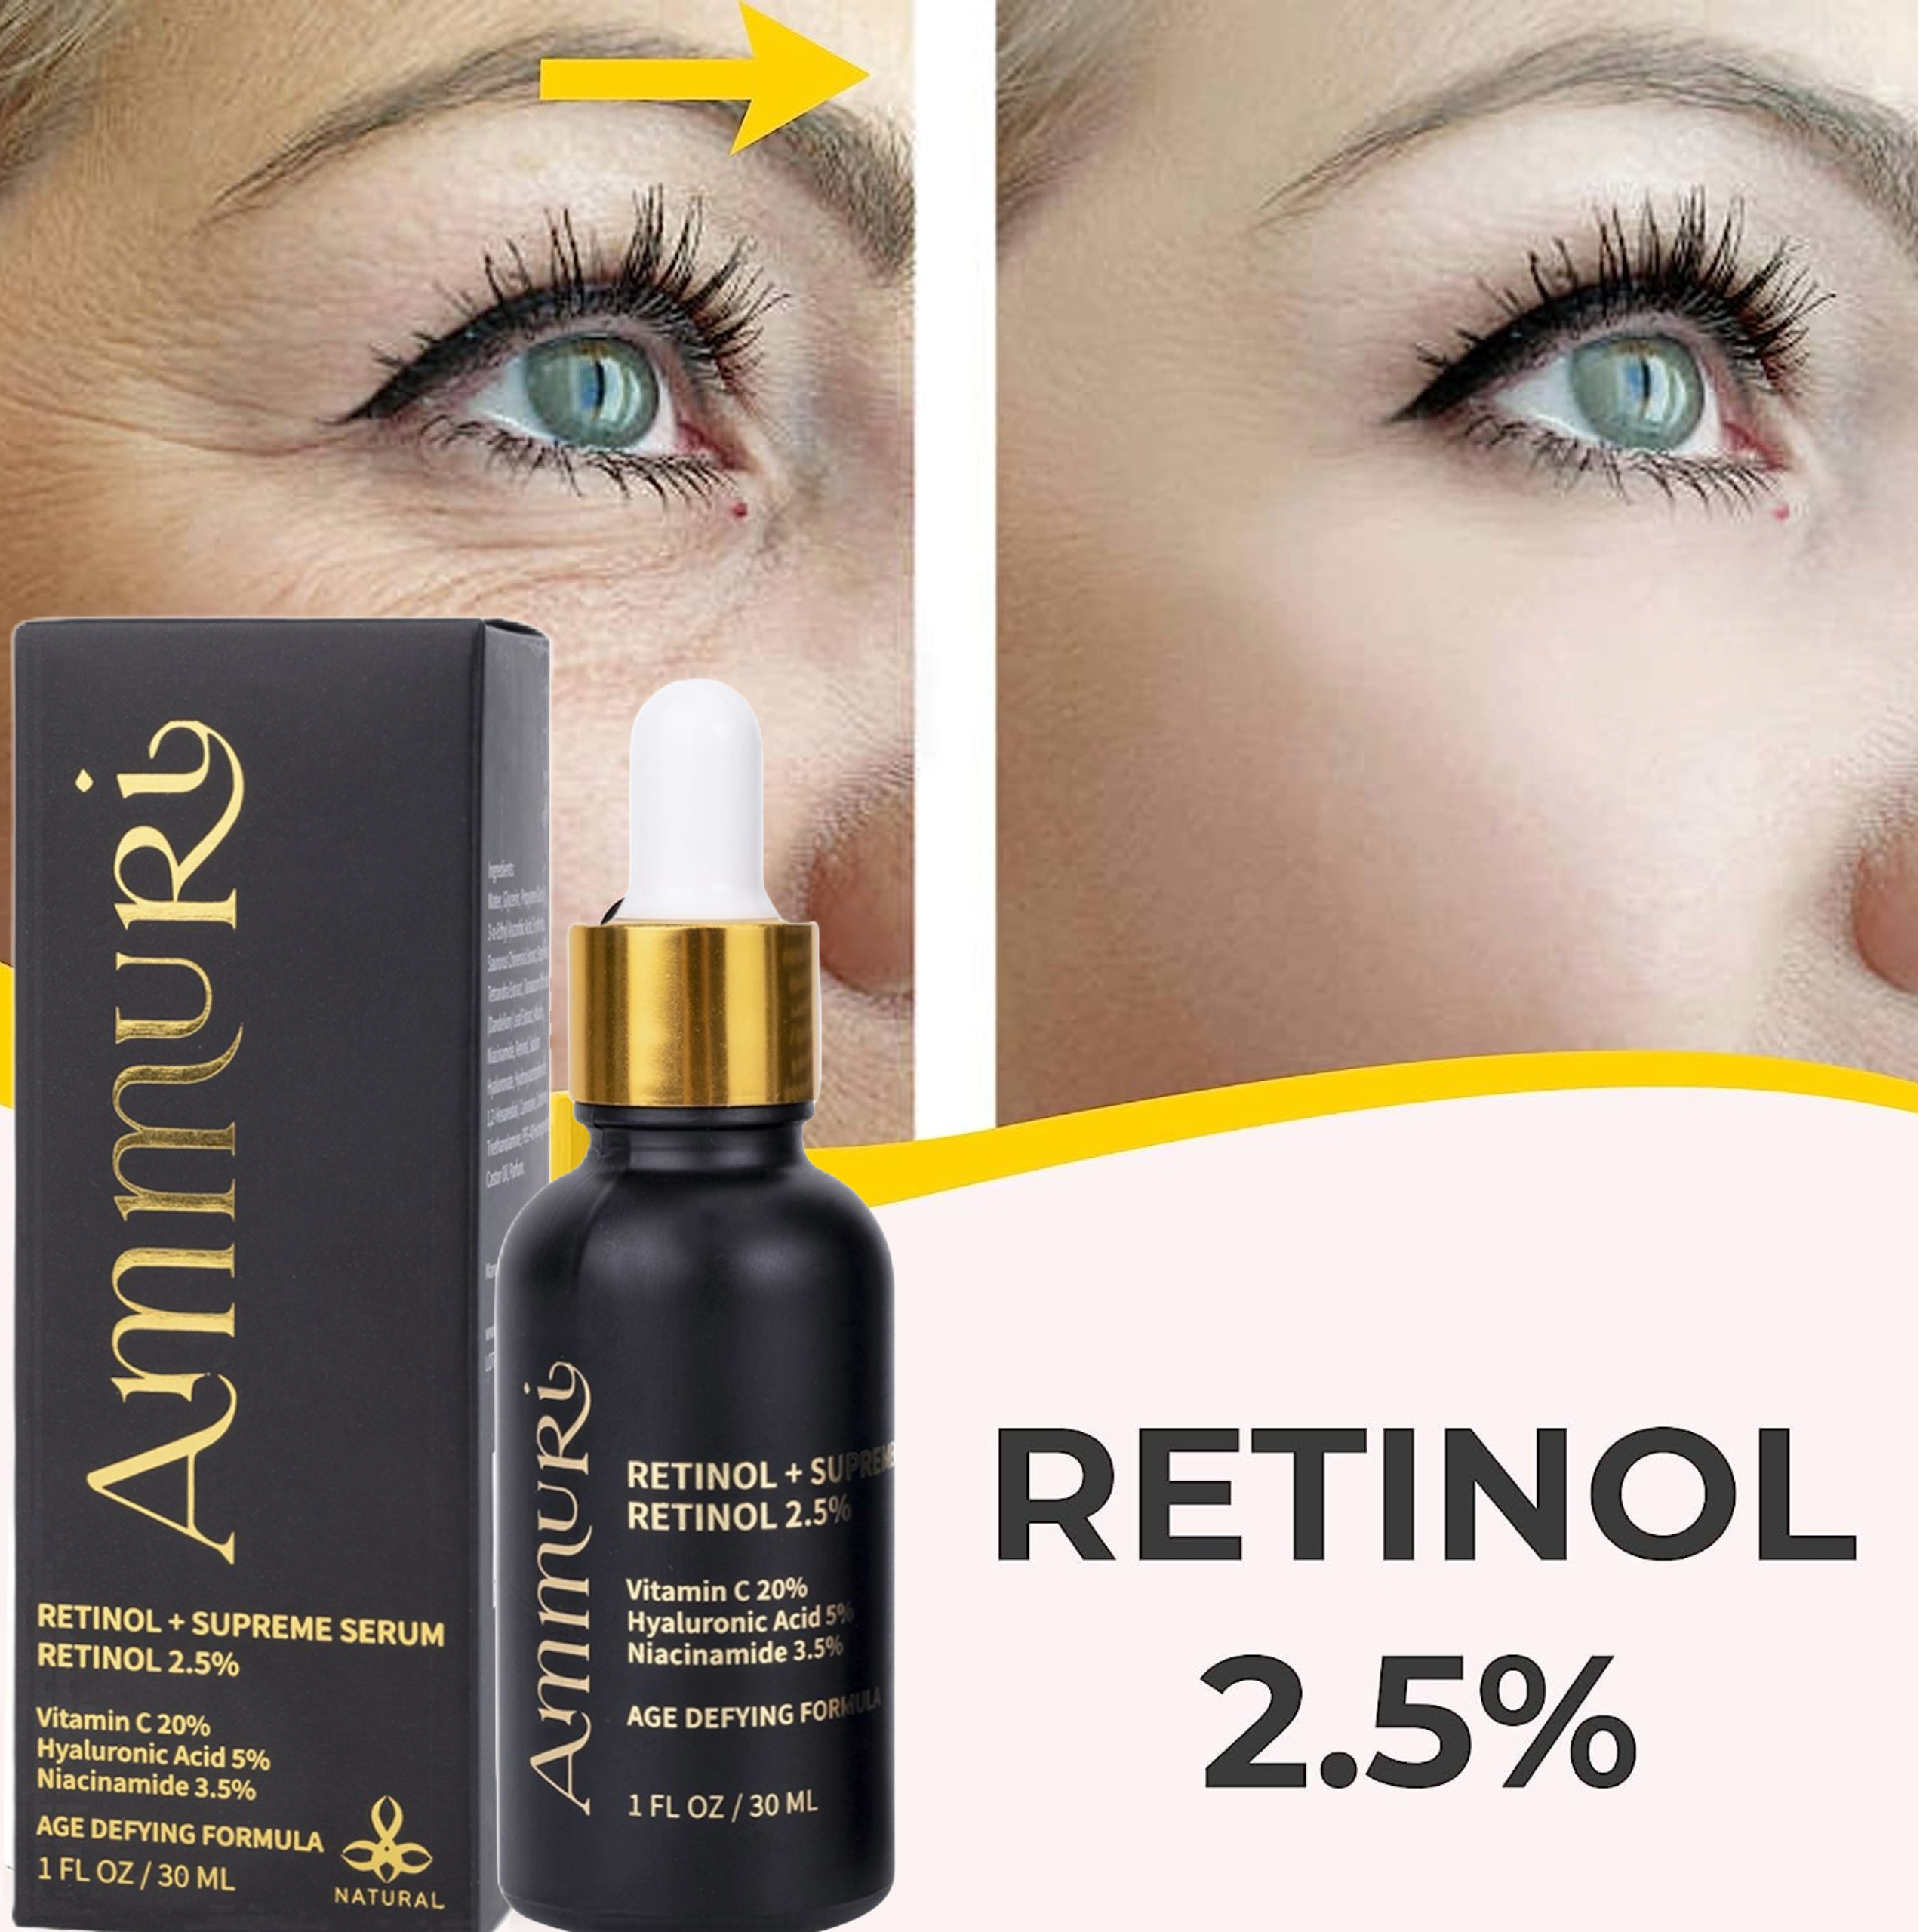 Ammuri Anti Aging Retinol Supreme Serum - Revitalize Your Skin with Age-Defying Formula Ammuri Skincare